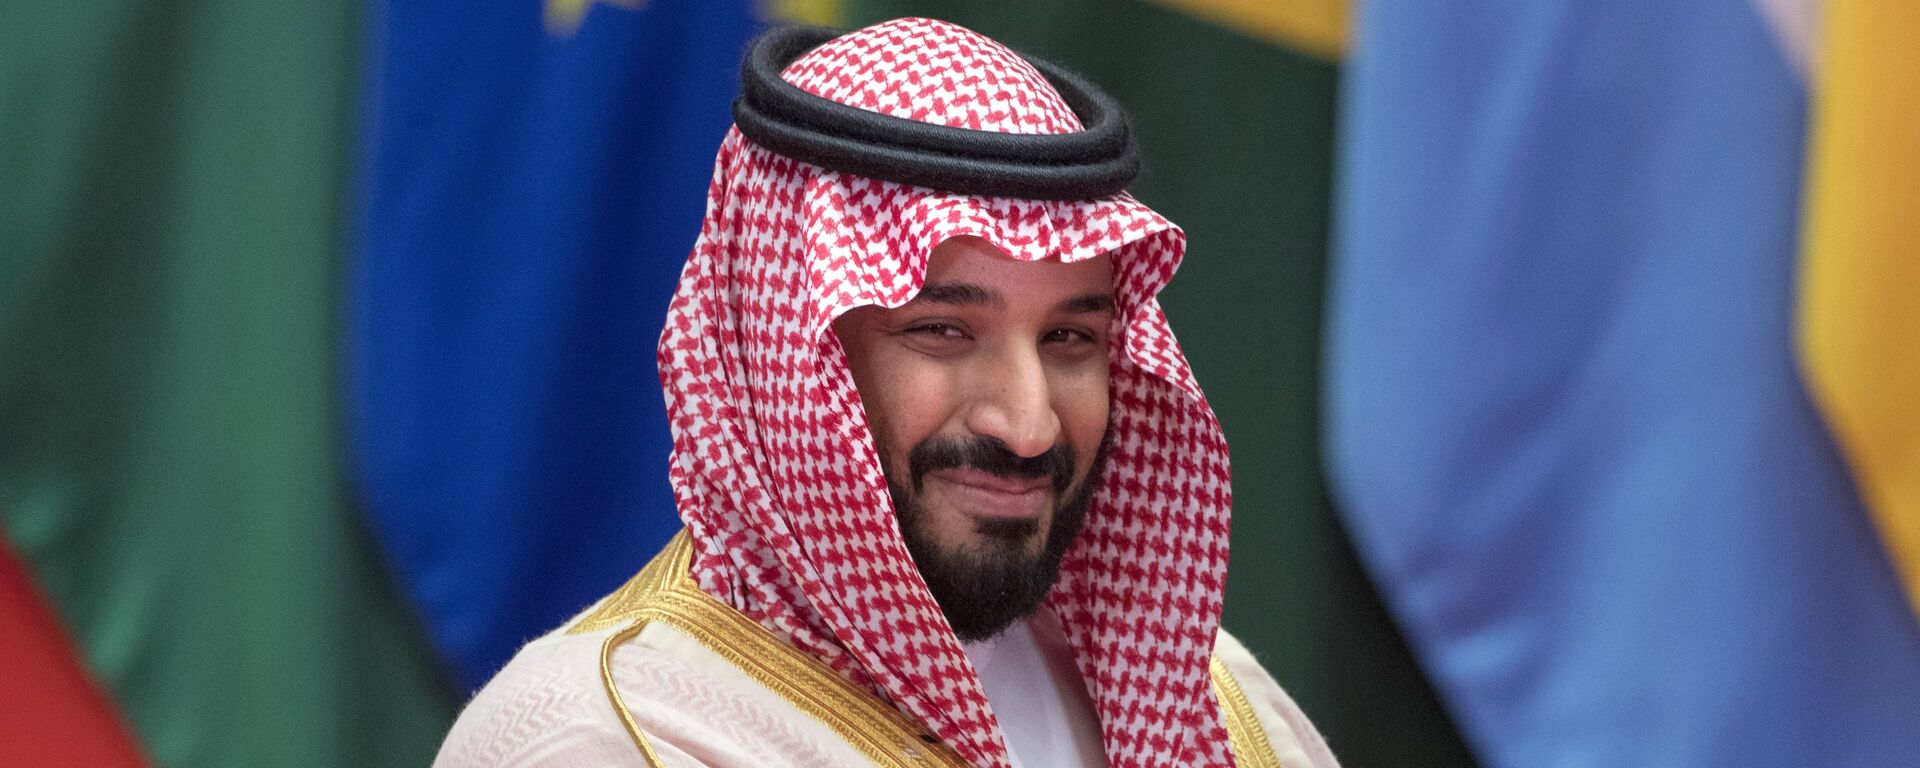 Mohammad bin Salman Al Saud, príncipe herdeiro da Arábia Saudita - Sputnik Brasil, 1920, 14.07.2022